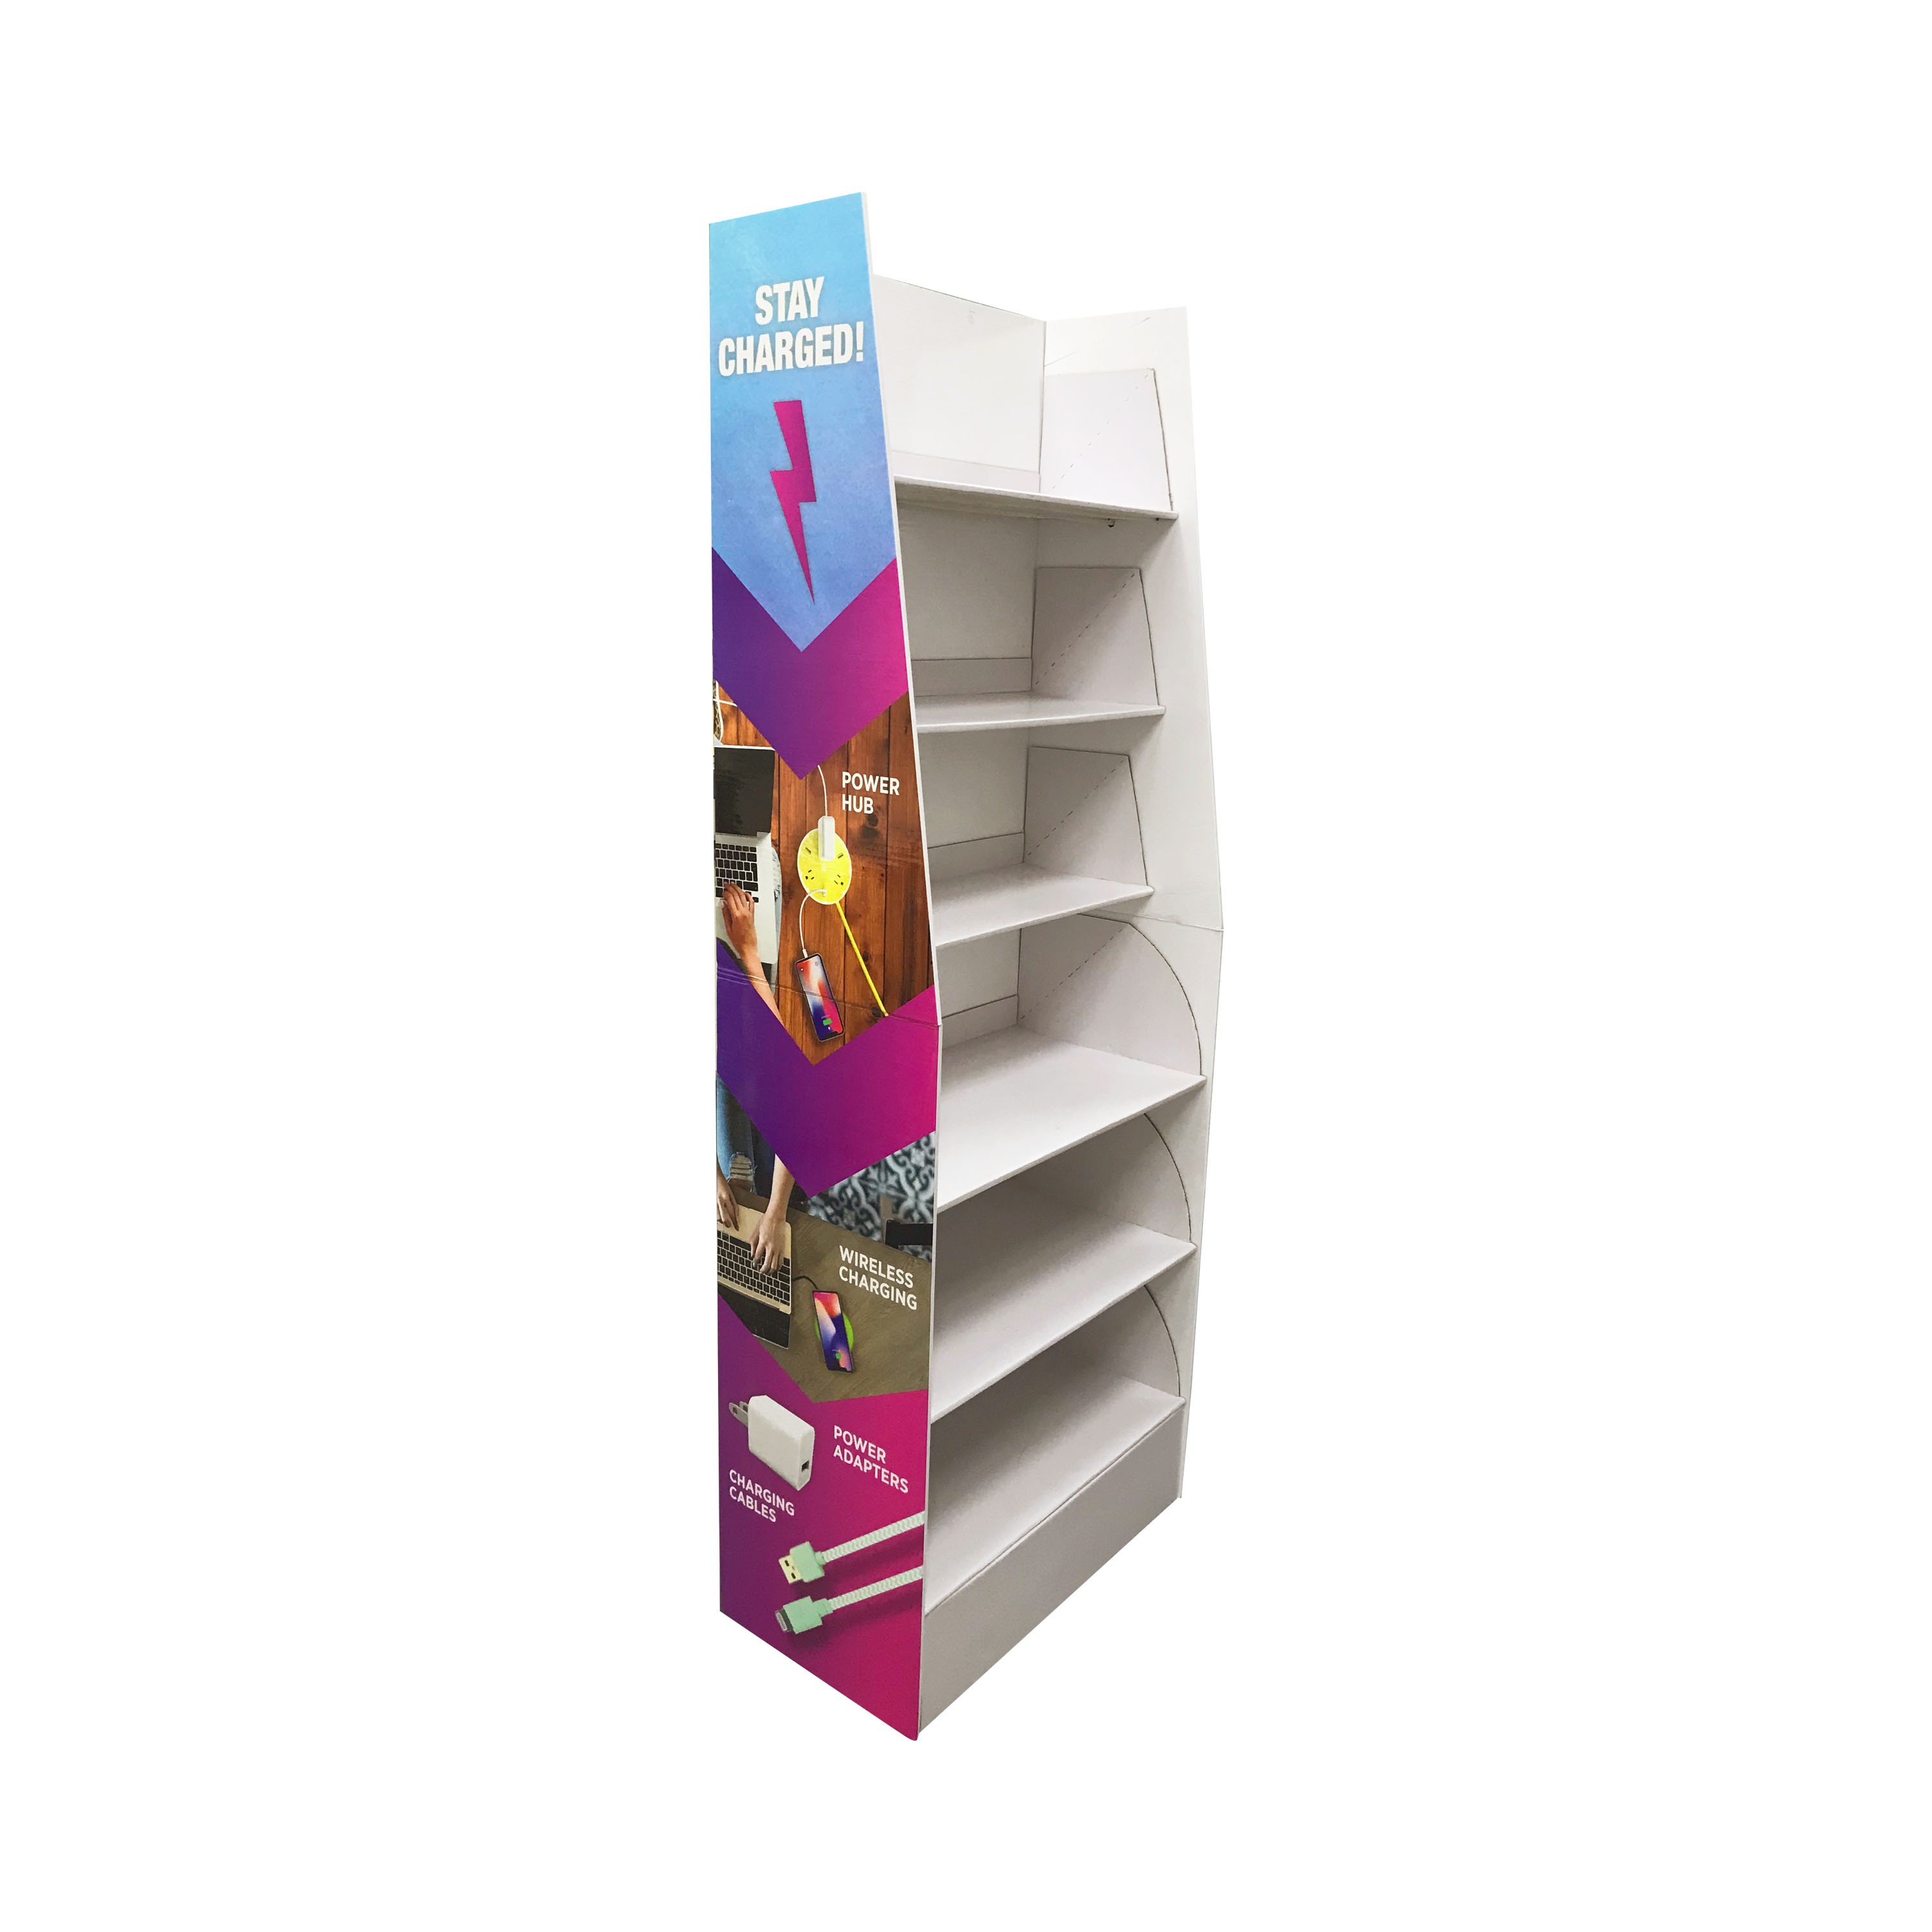 Cardboard Sidekick Hangsell Display with Shelf